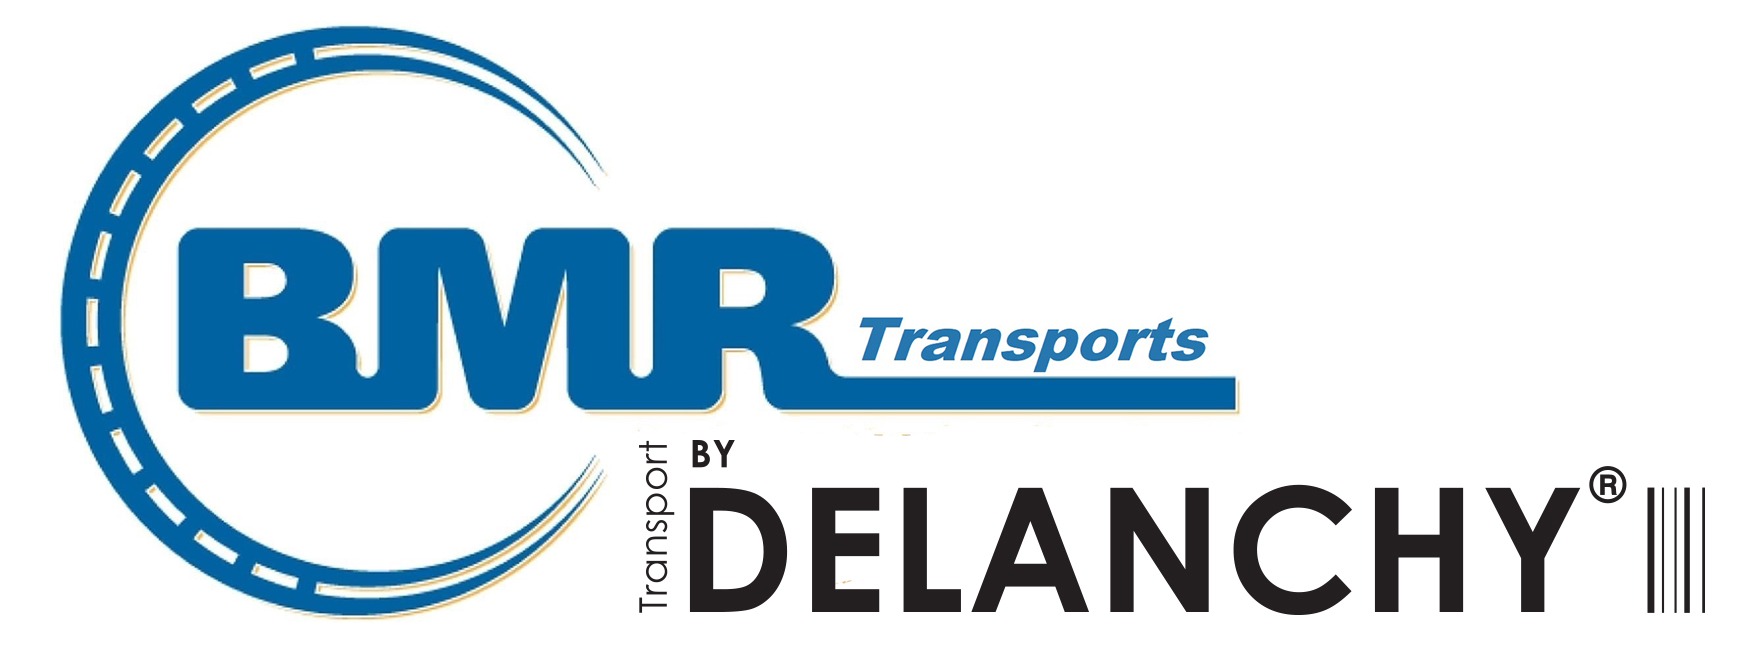 BMR Transports entra a far parte del Gruppo DELANCHY